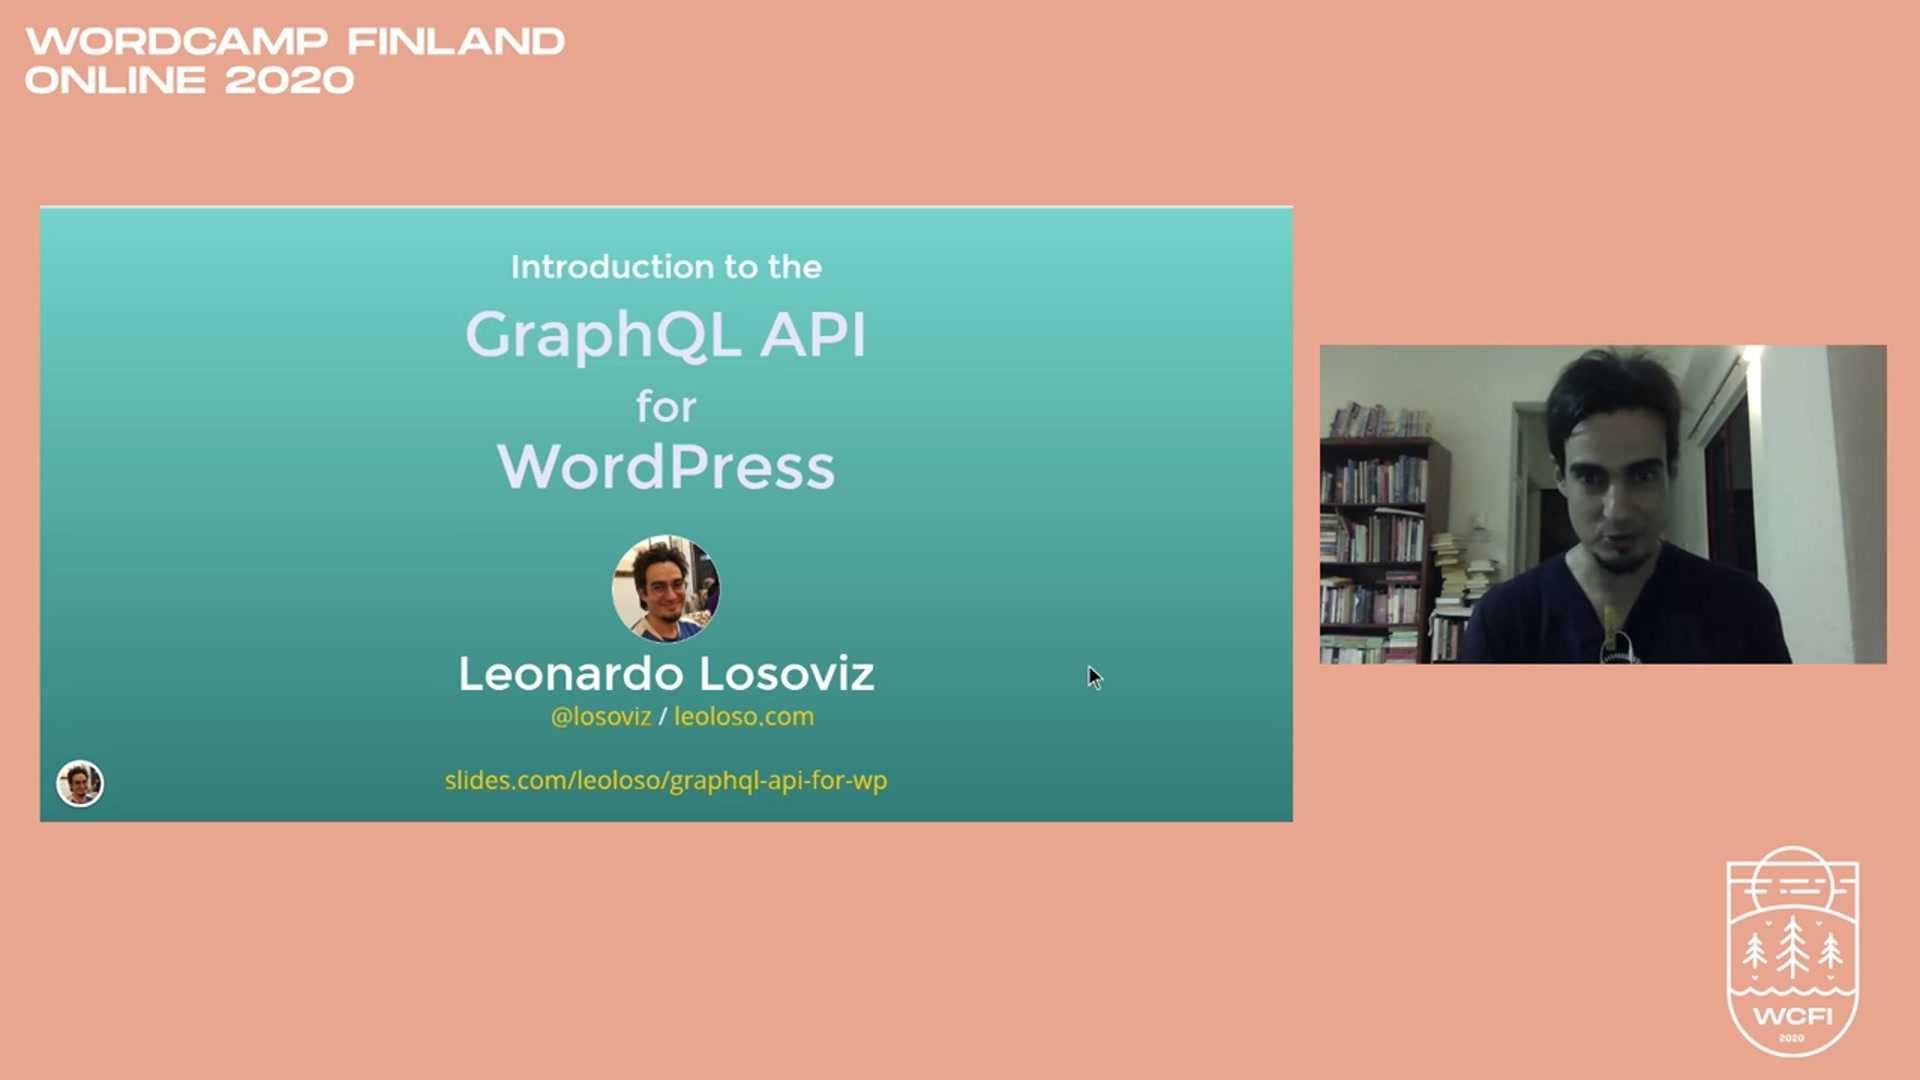 Leonardo Losoviz: Introduction to the GraphQL API for WordPress